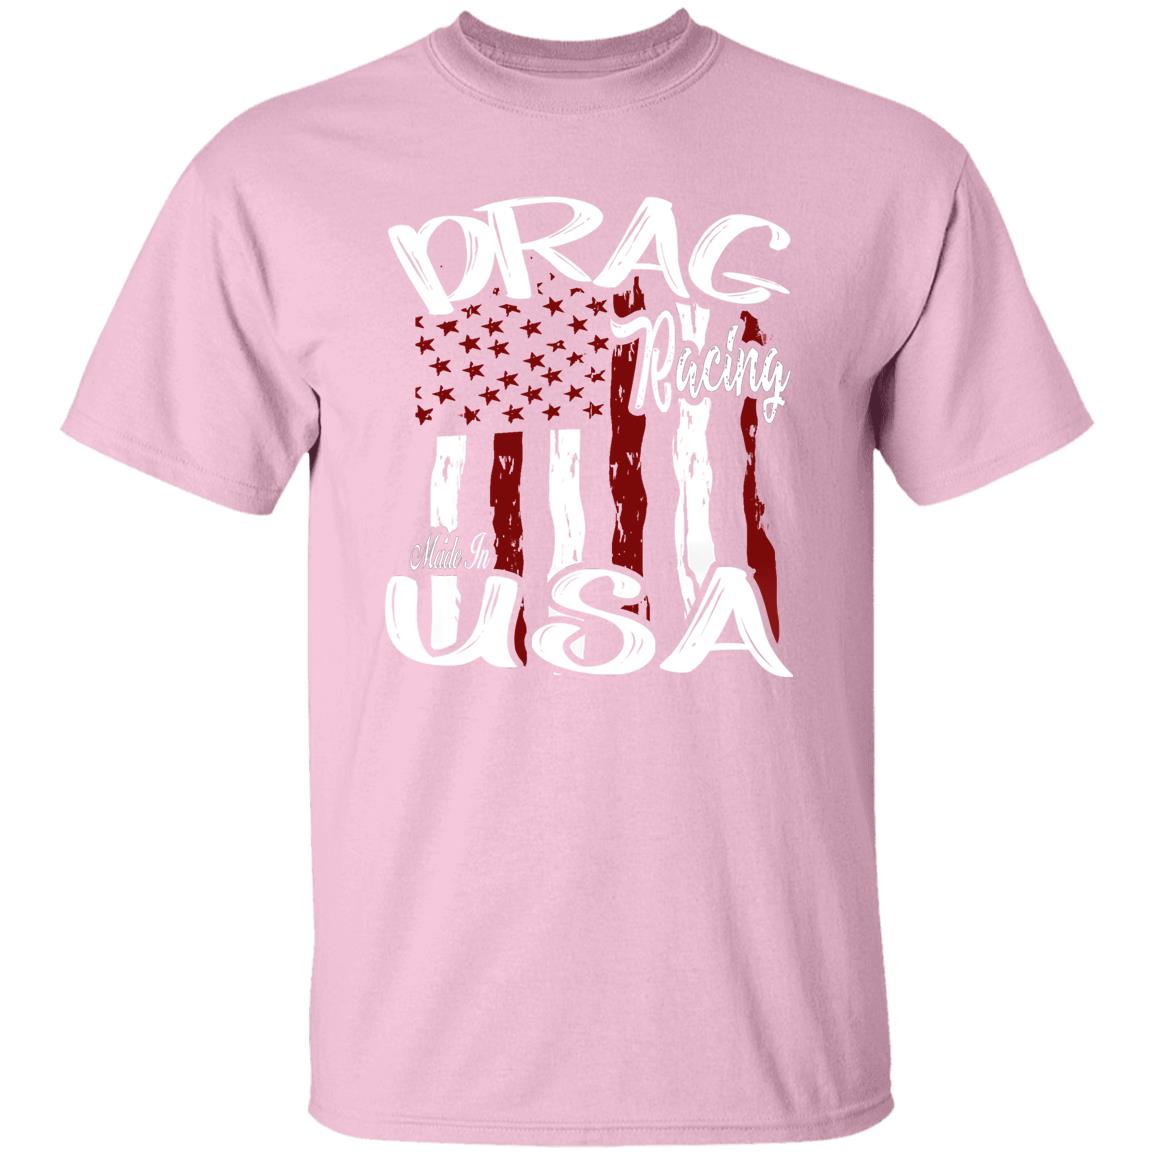 Drag Racing Made In USA 5.3 oz. T-Shirt